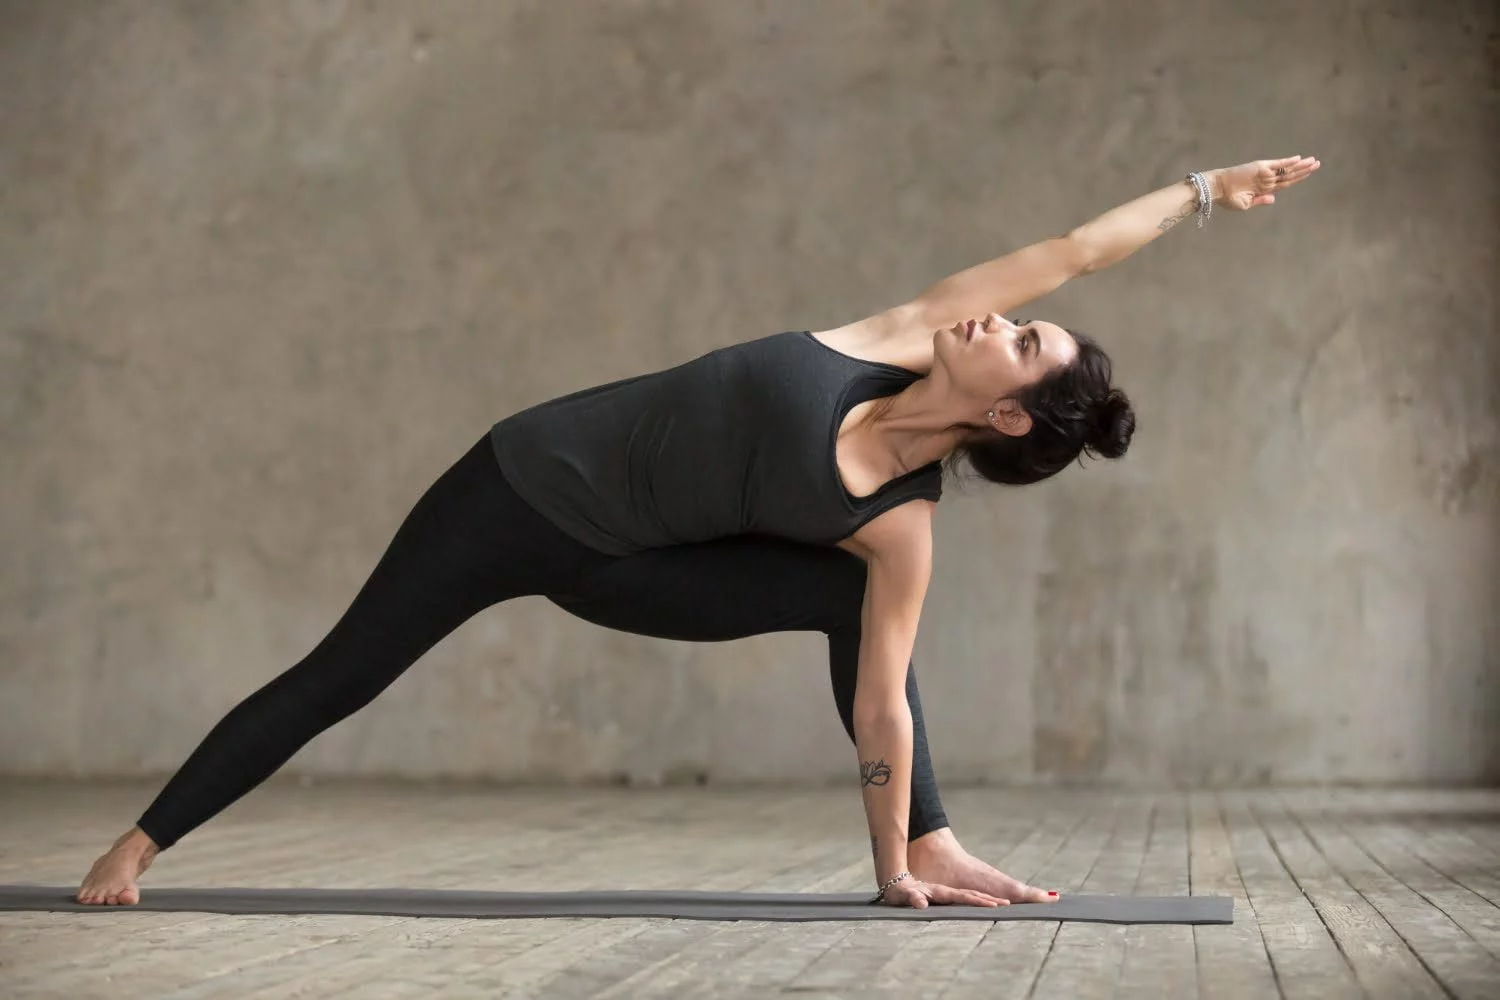 7 Advanced Arm Balance Yoga Poses